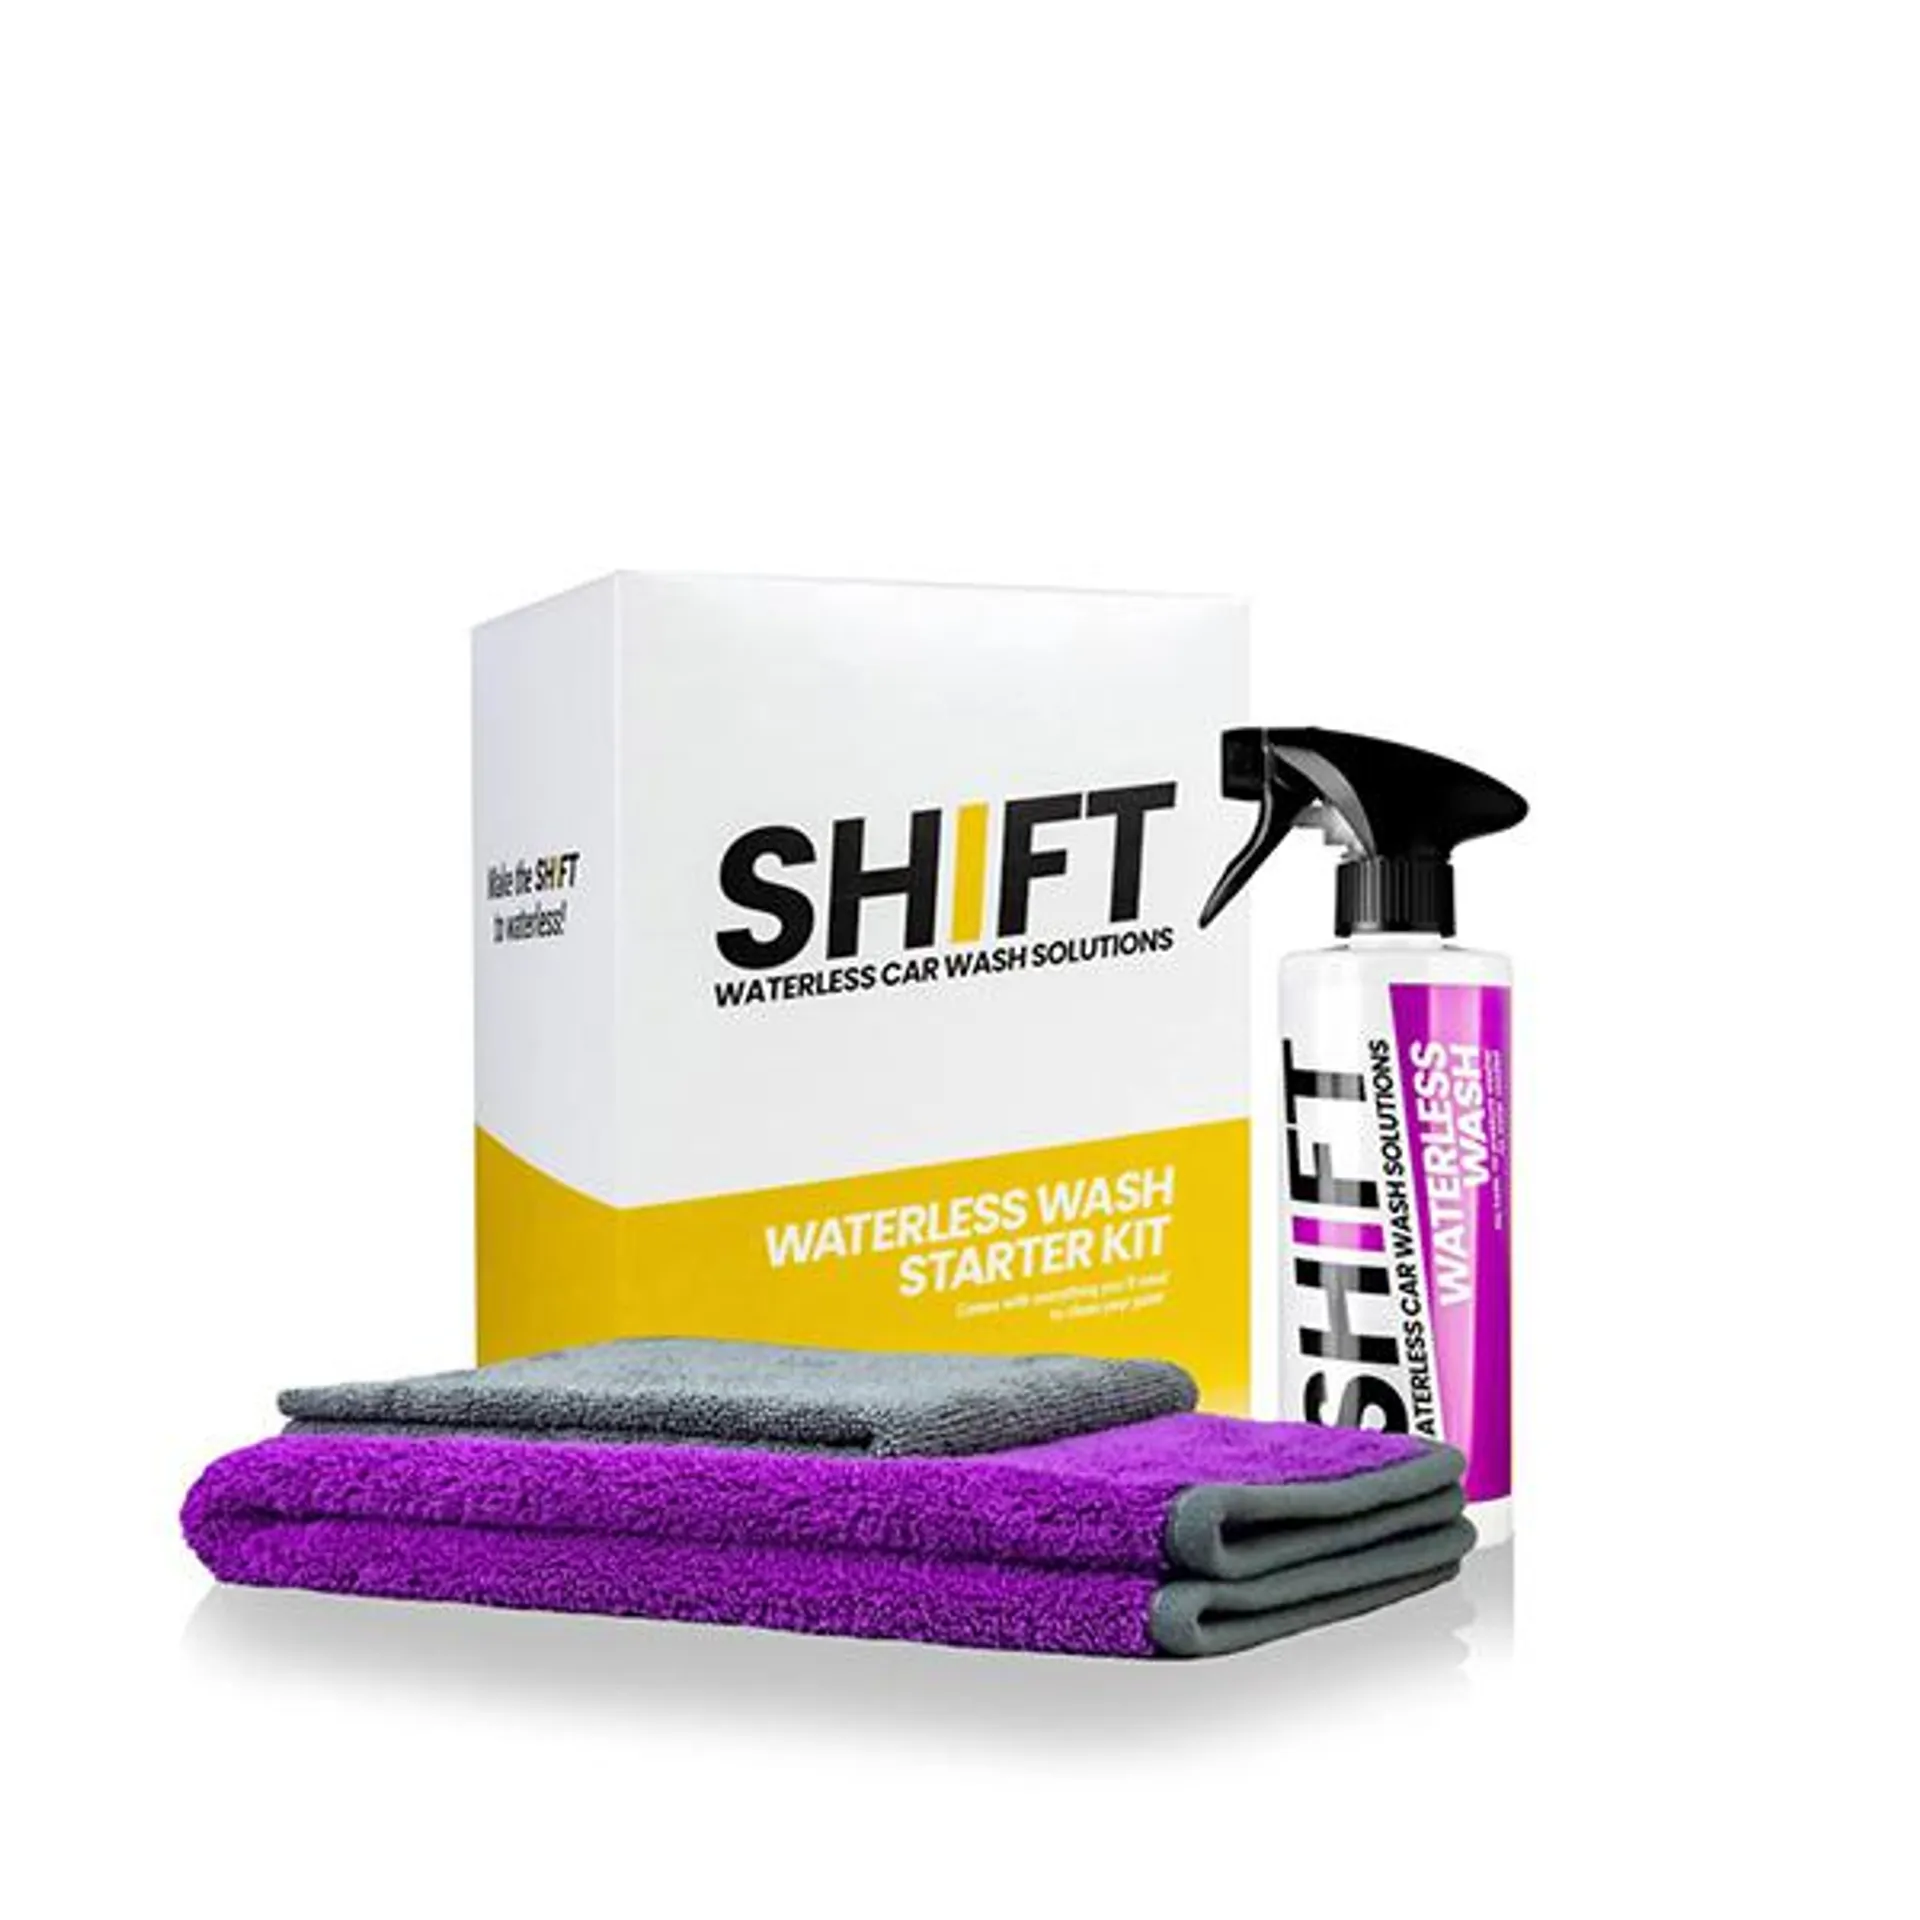 Shift Waterless Wash Starter Kit